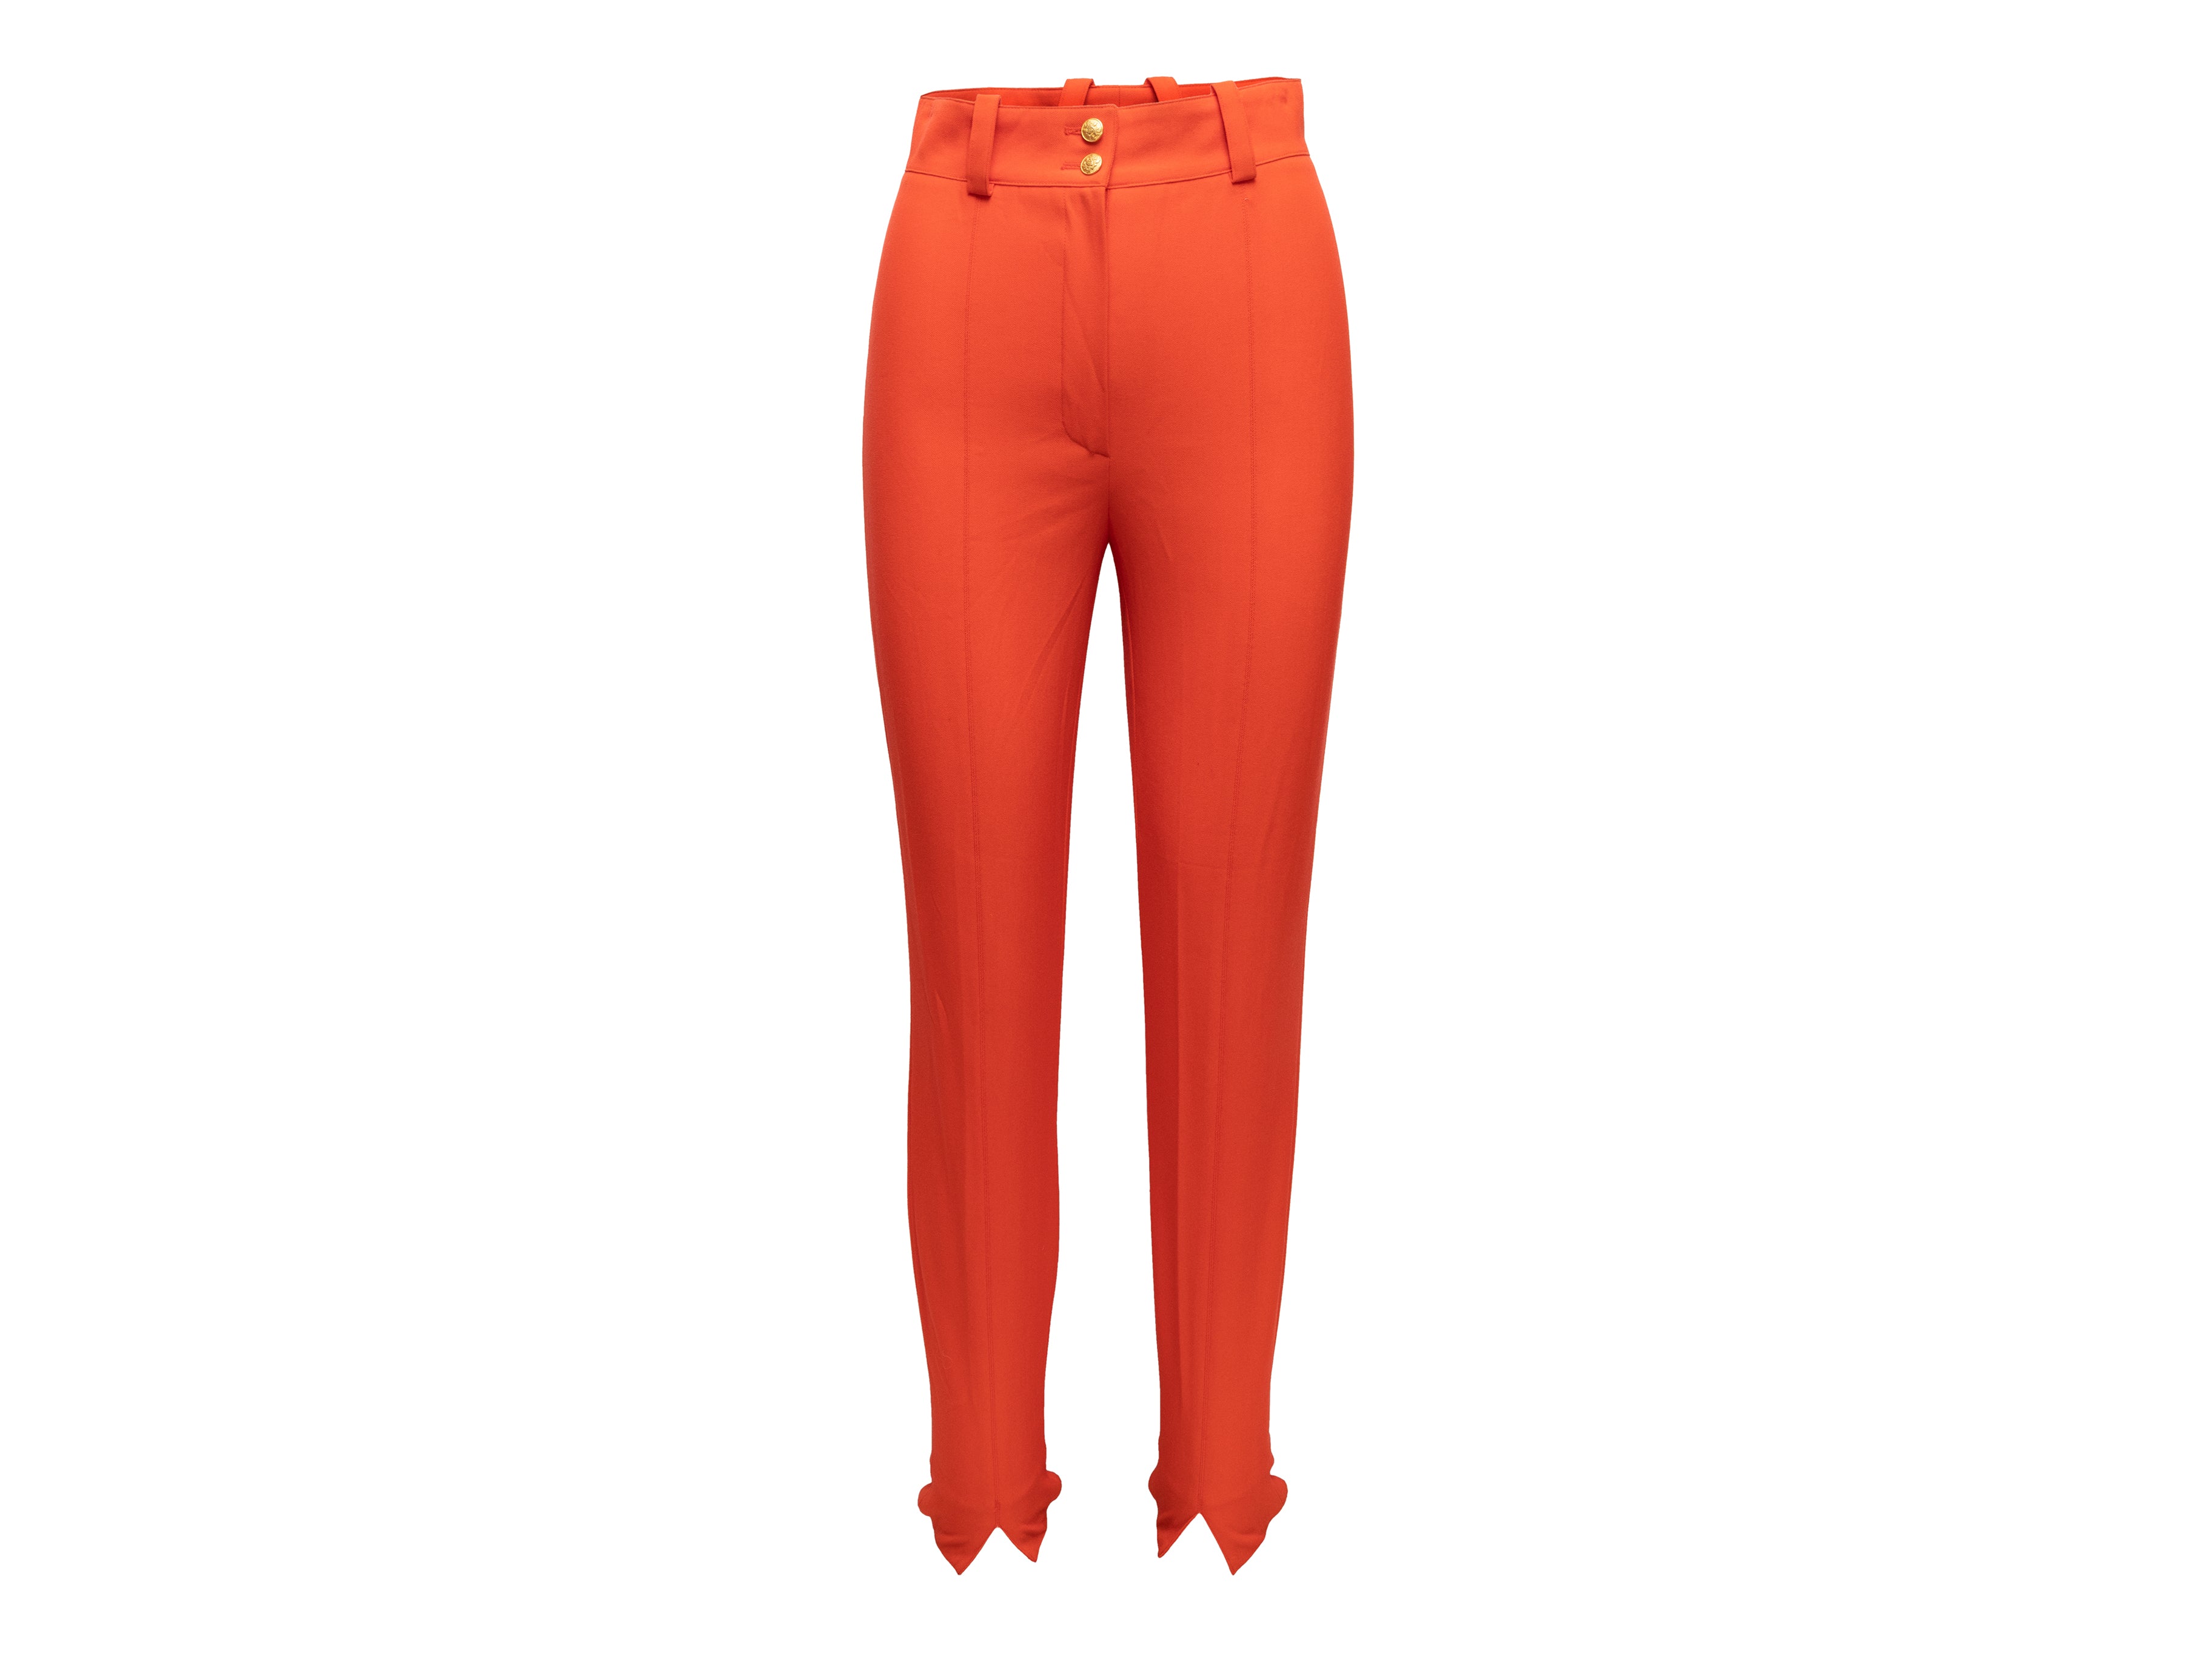 Buy DG Womens Pants Multicolor Size 38 at Amazonin